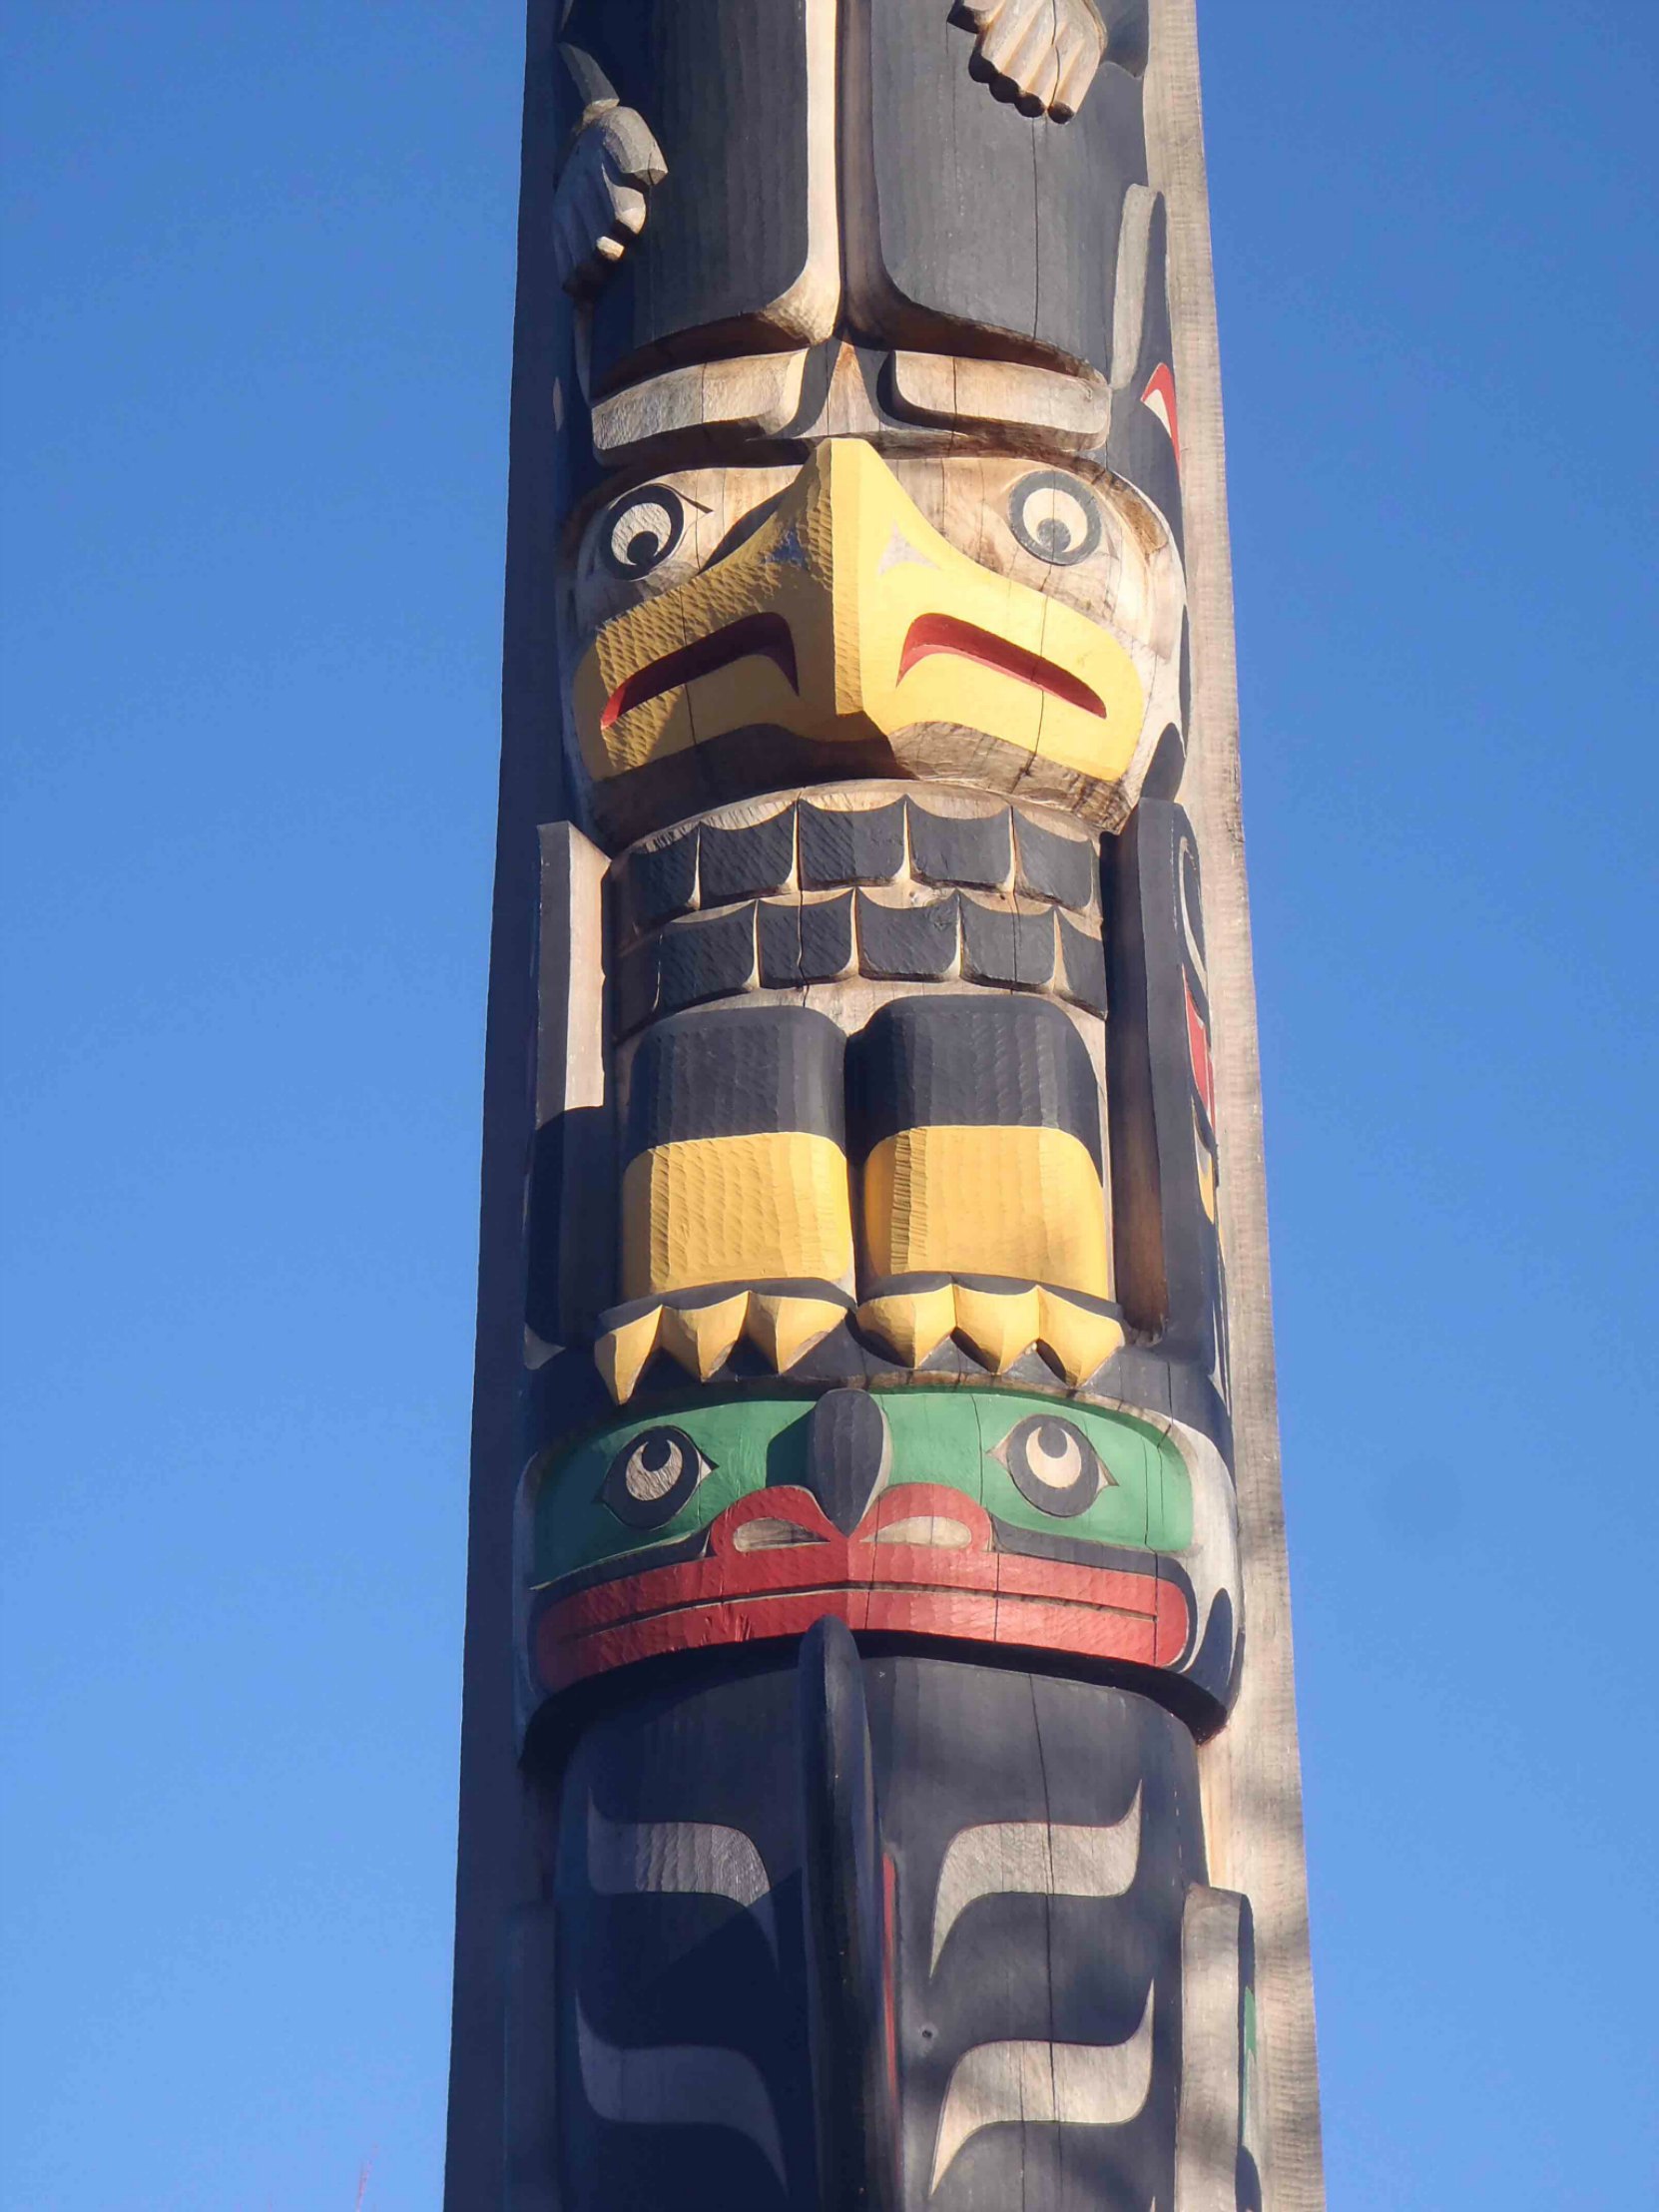 Centennial Pole, Thunderbird figure, Canada Avenue, Duncan, B.C.